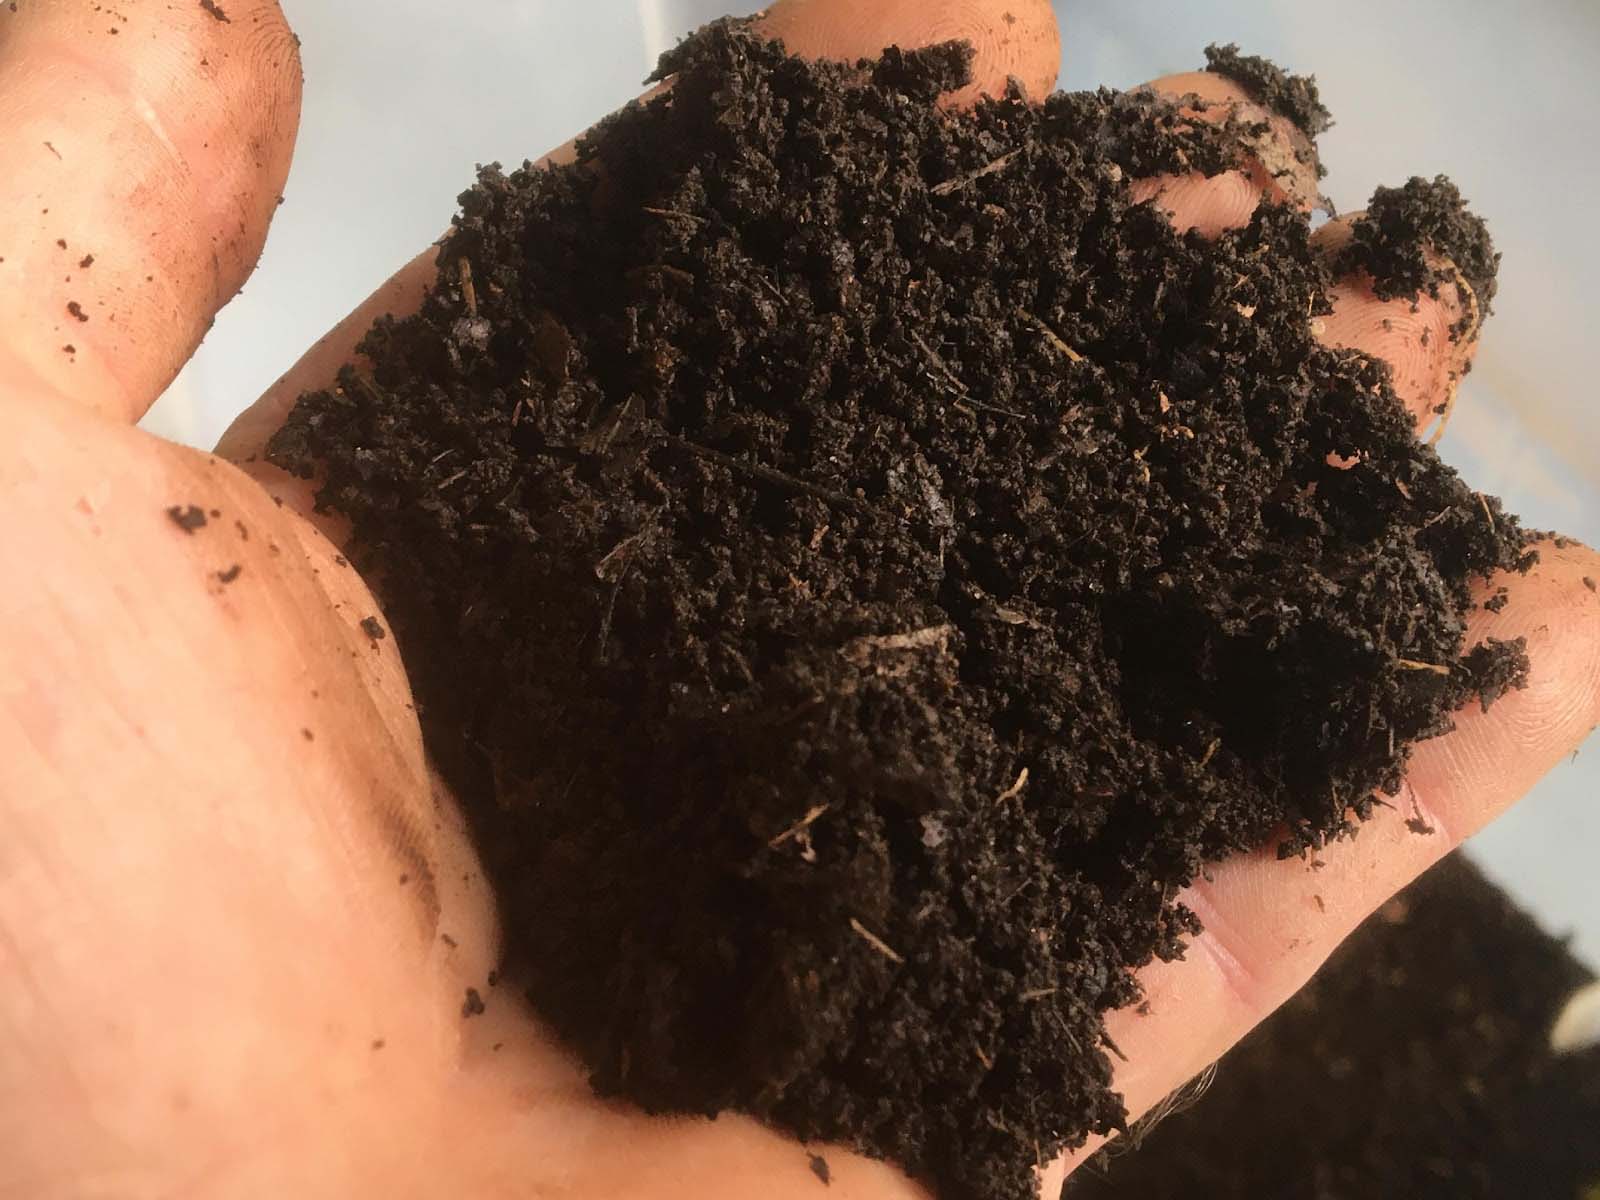 A hand holding leaf mold, a blackish soil-like substance